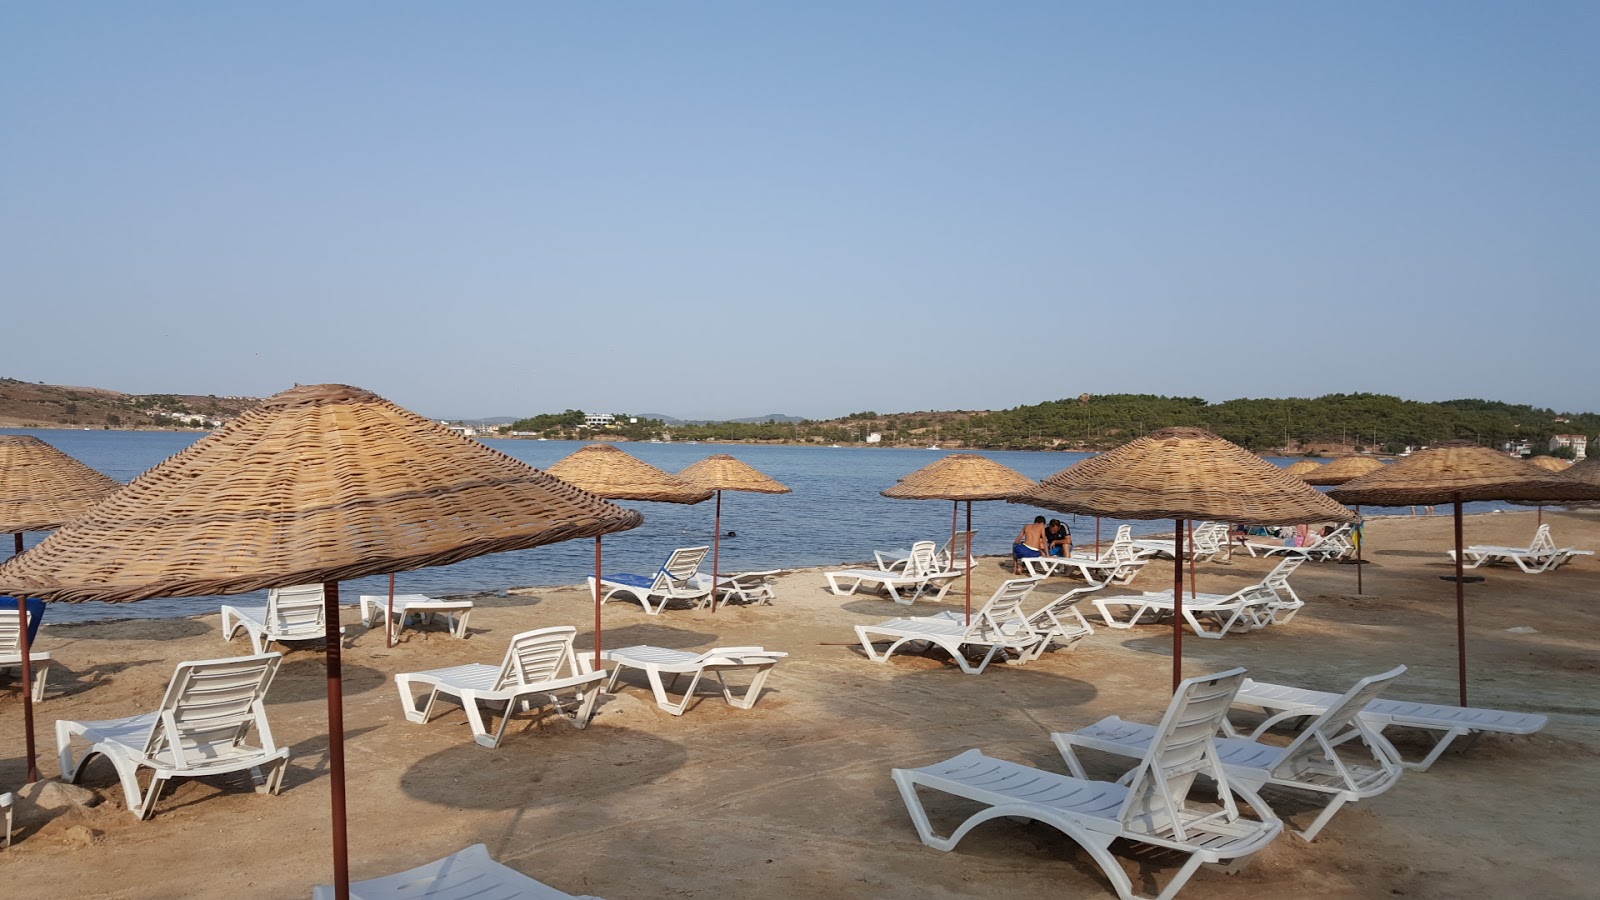 Foto de Ayvalik beach - lugar popular entre os apreciadores de relaxamento